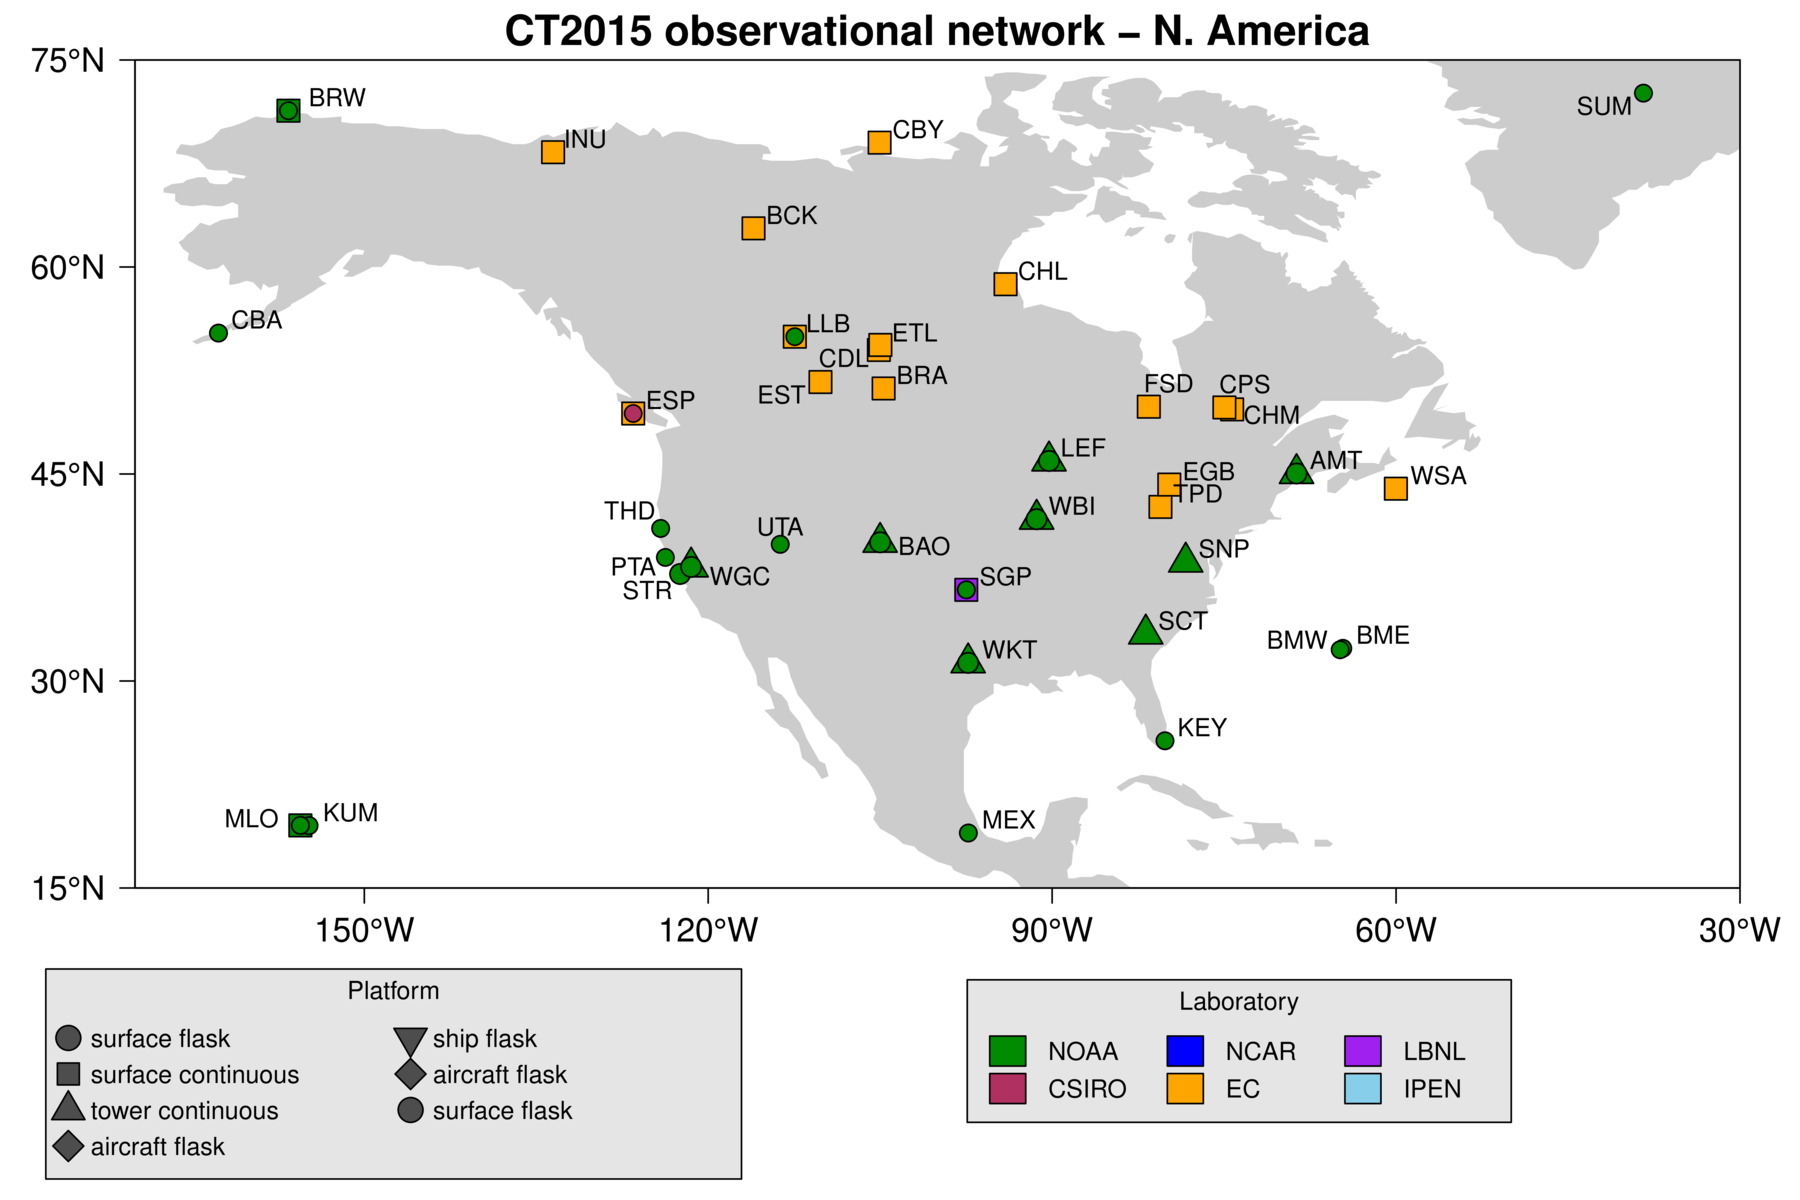 /webdata/ccgg/CT2015/summary/network-nam.png